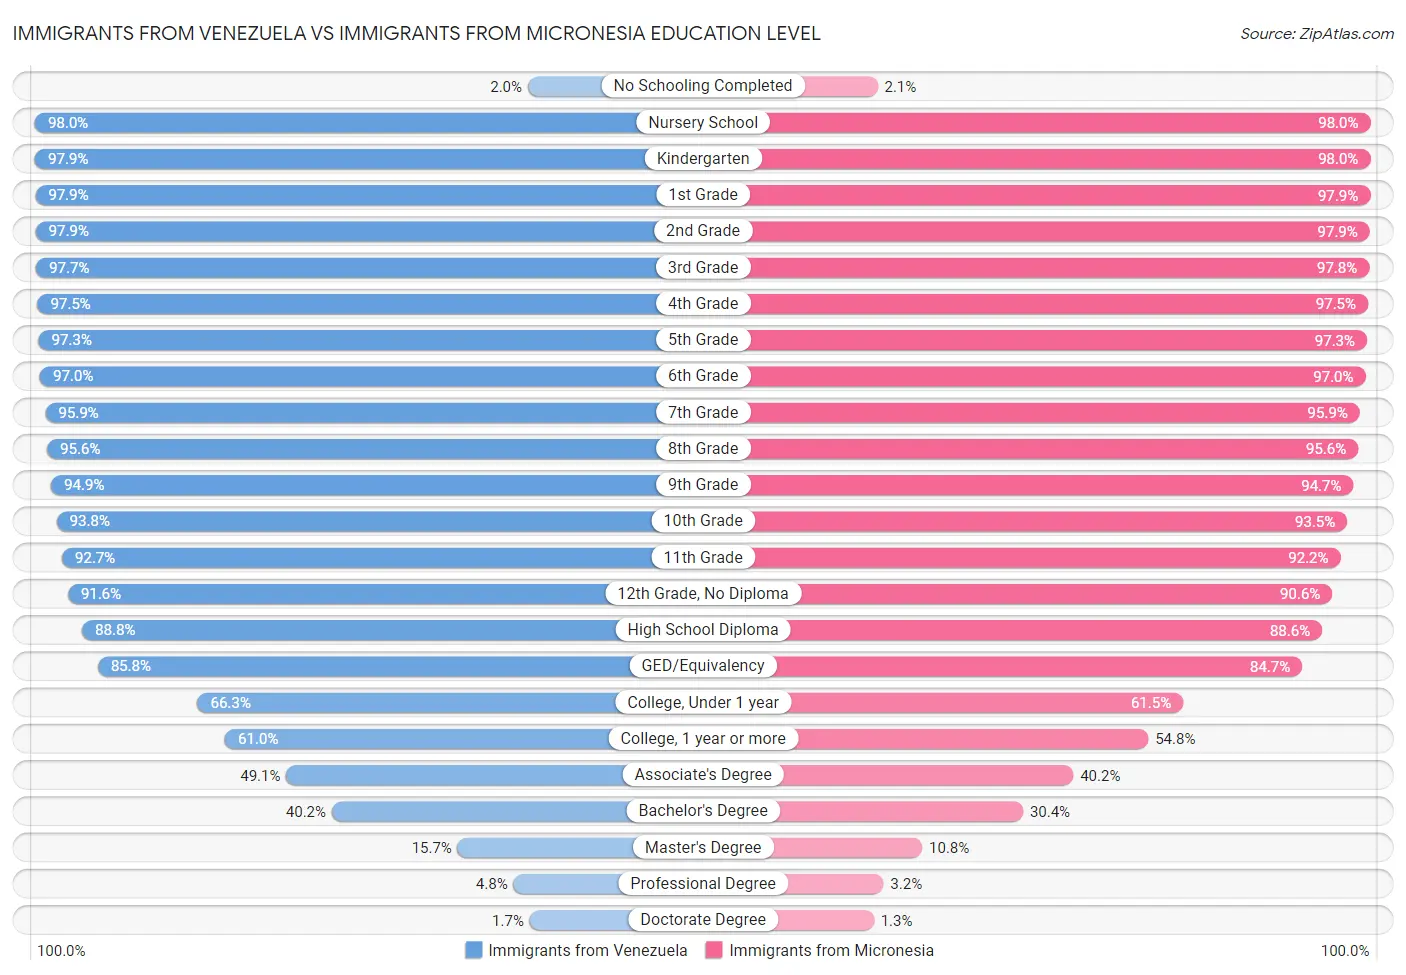 Immigrants from Venezuela vs Immigrants from Micronesia Education Level